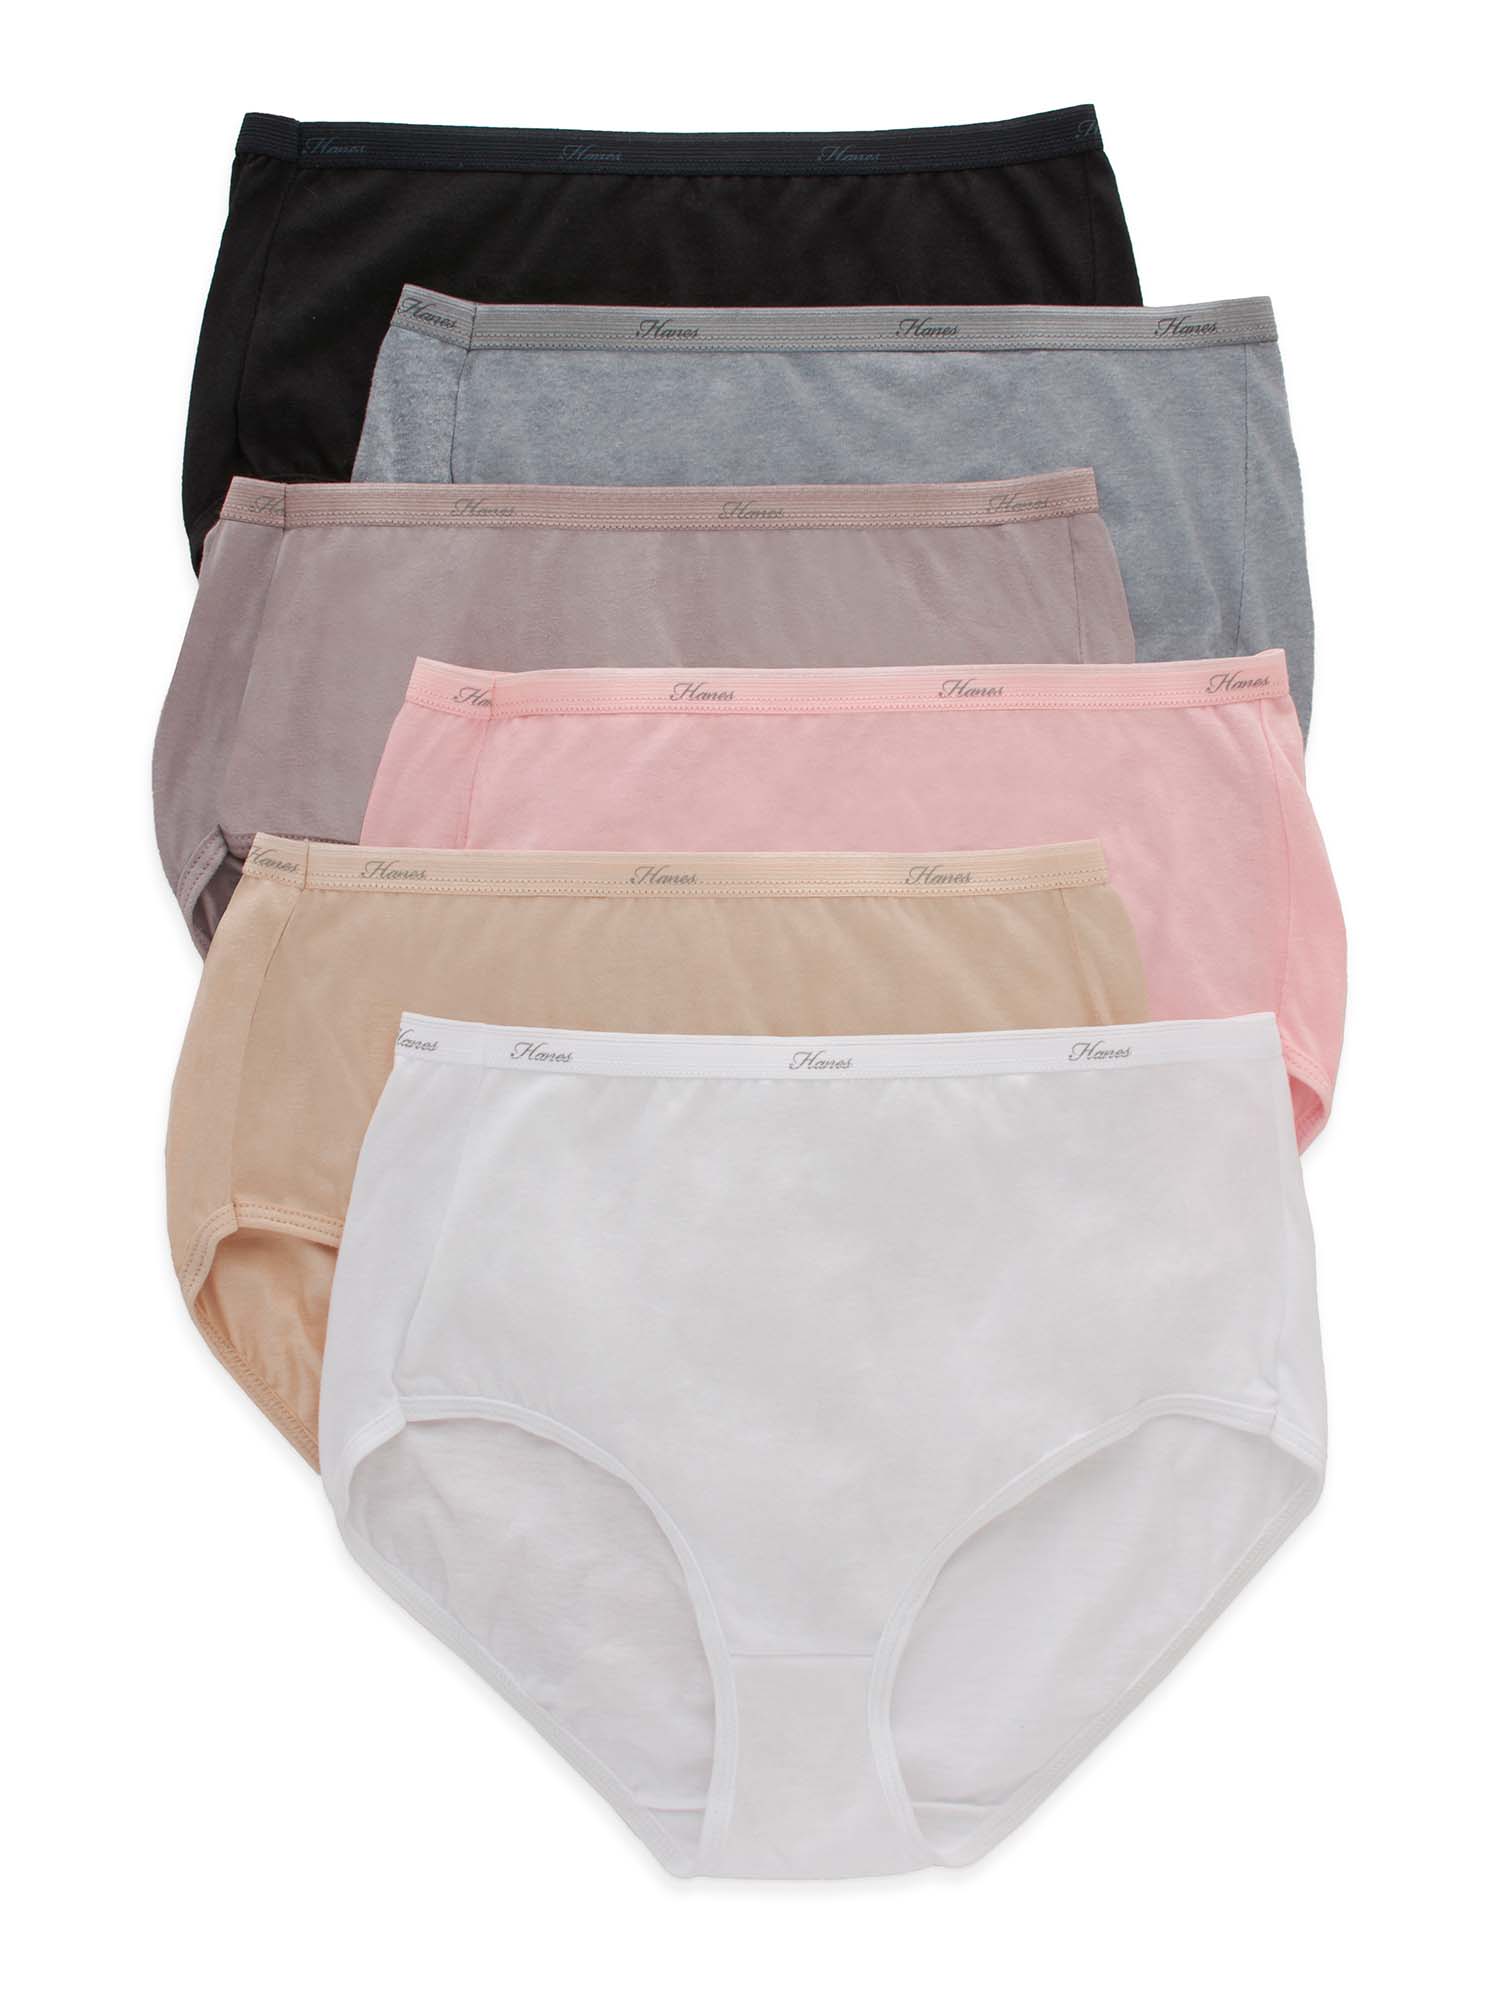 Hanes Women's Cool Comfort Cotton Brief Panties 6 Pack - image 1 of 8